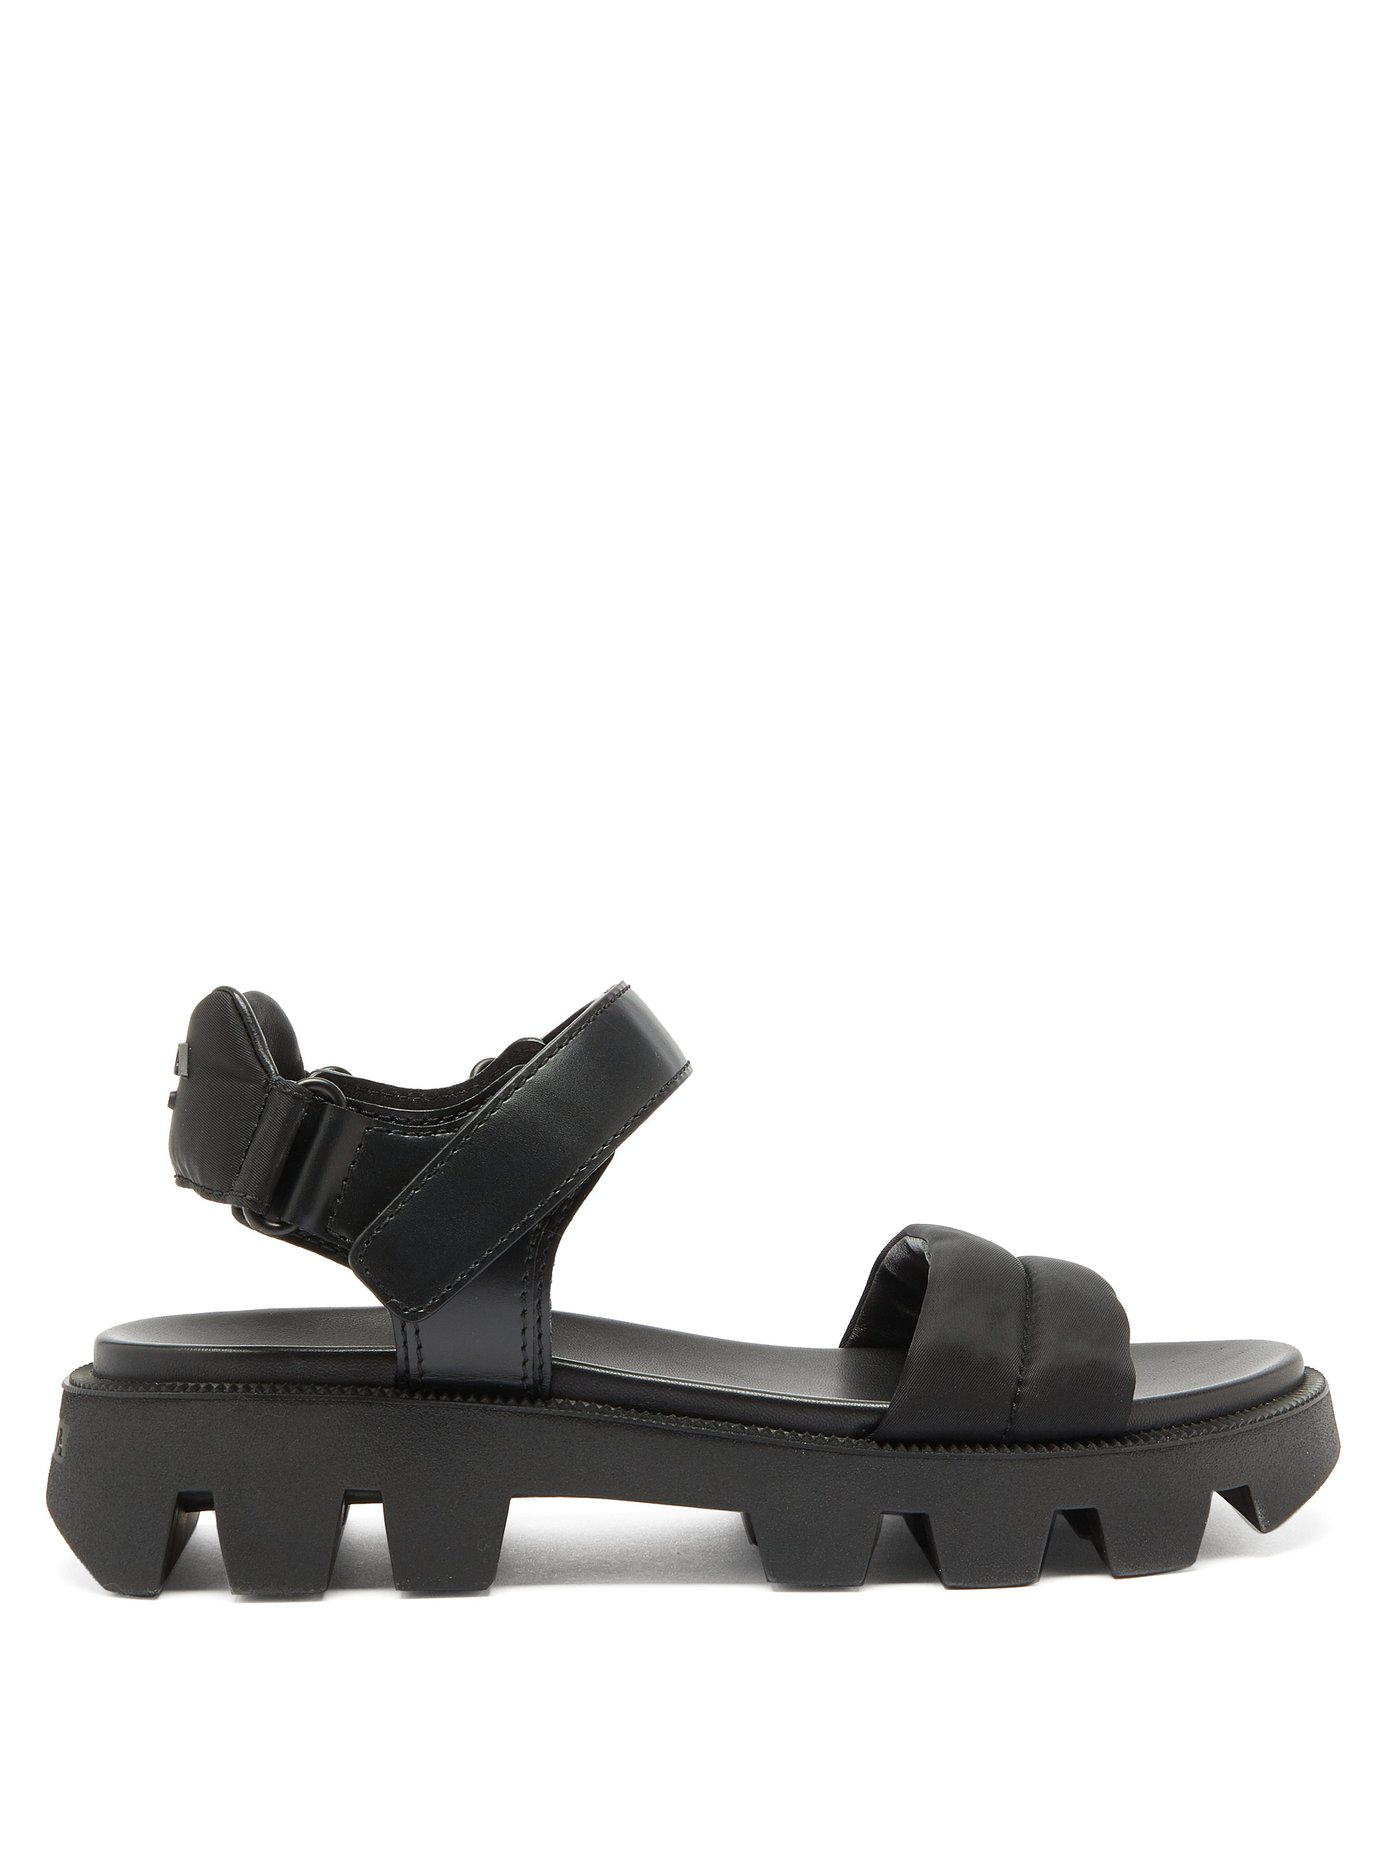 Leather and nylon sandals | Prada 